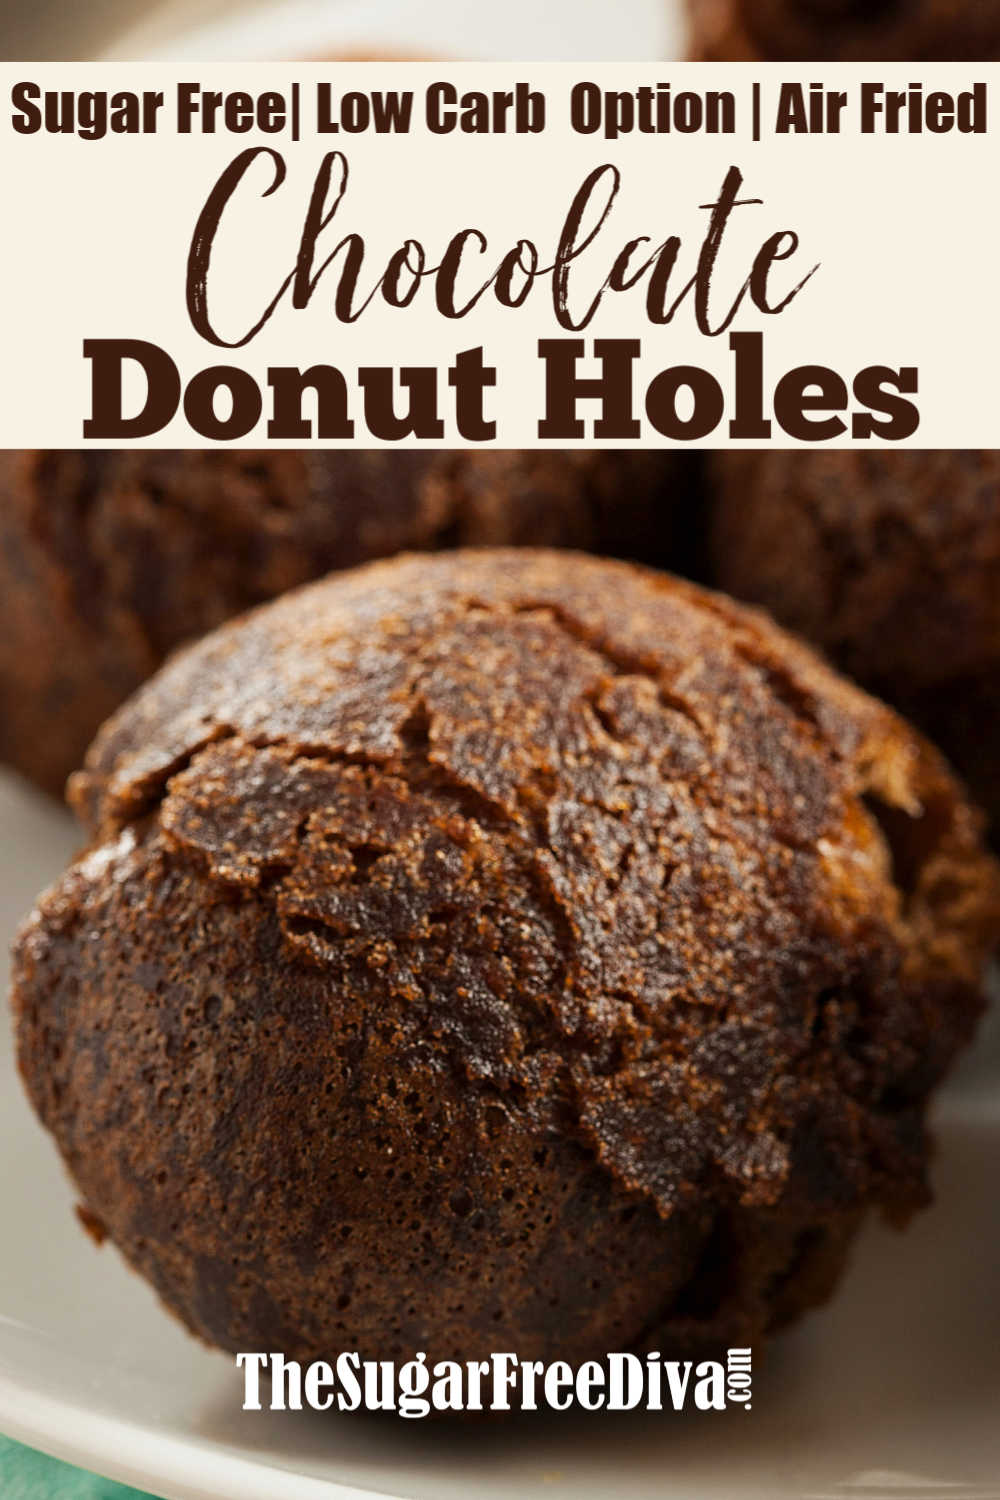 Sugar Free Air Fried Chocolate Donut Holes